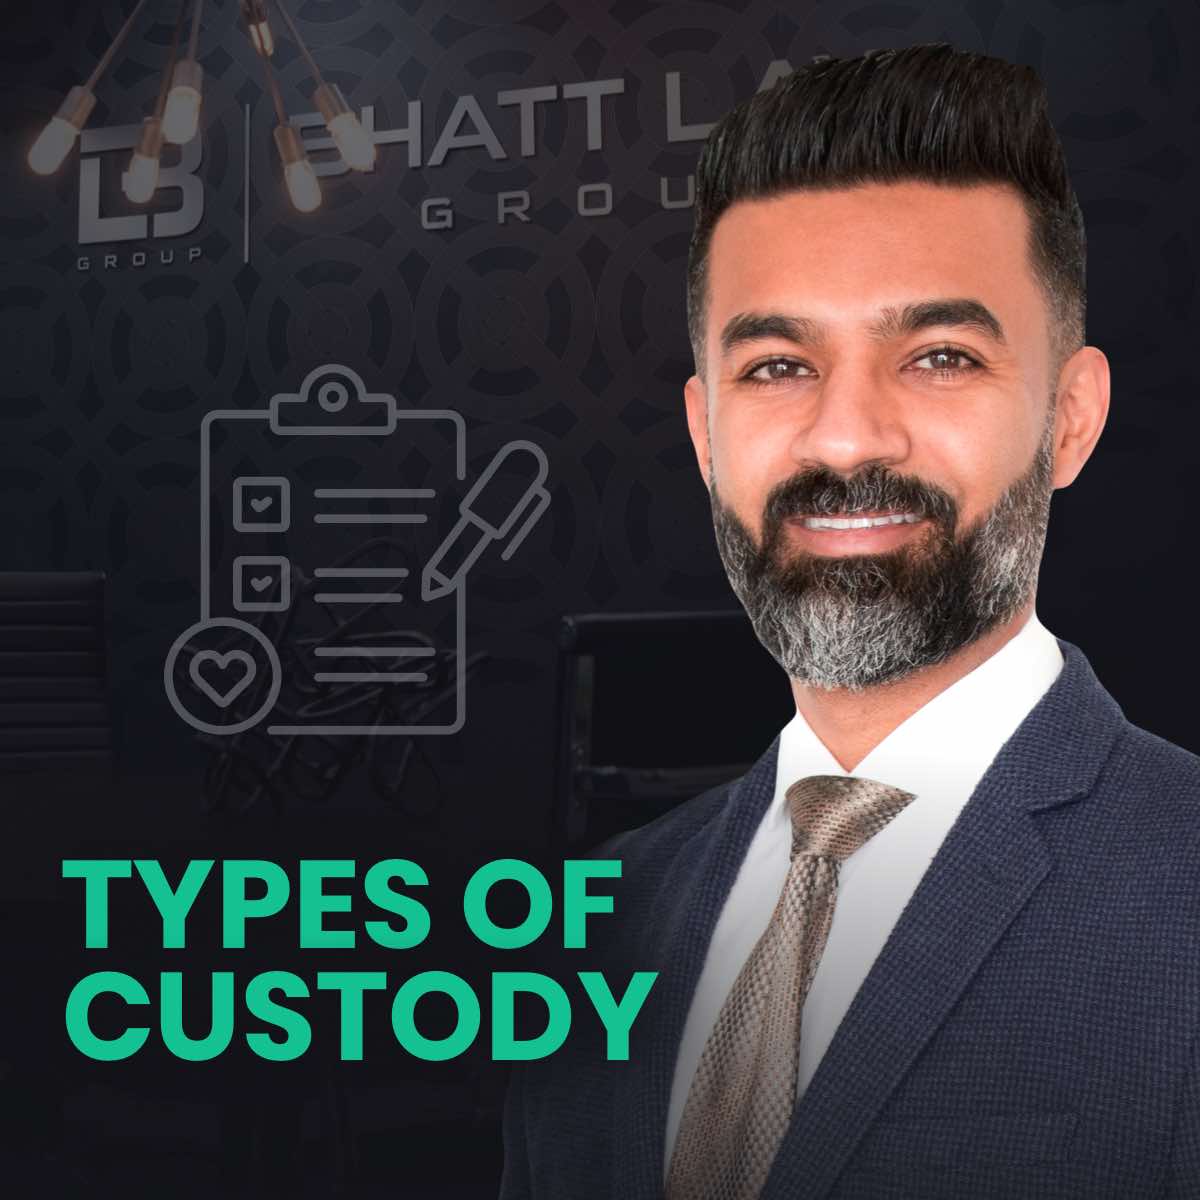 Types of Custody